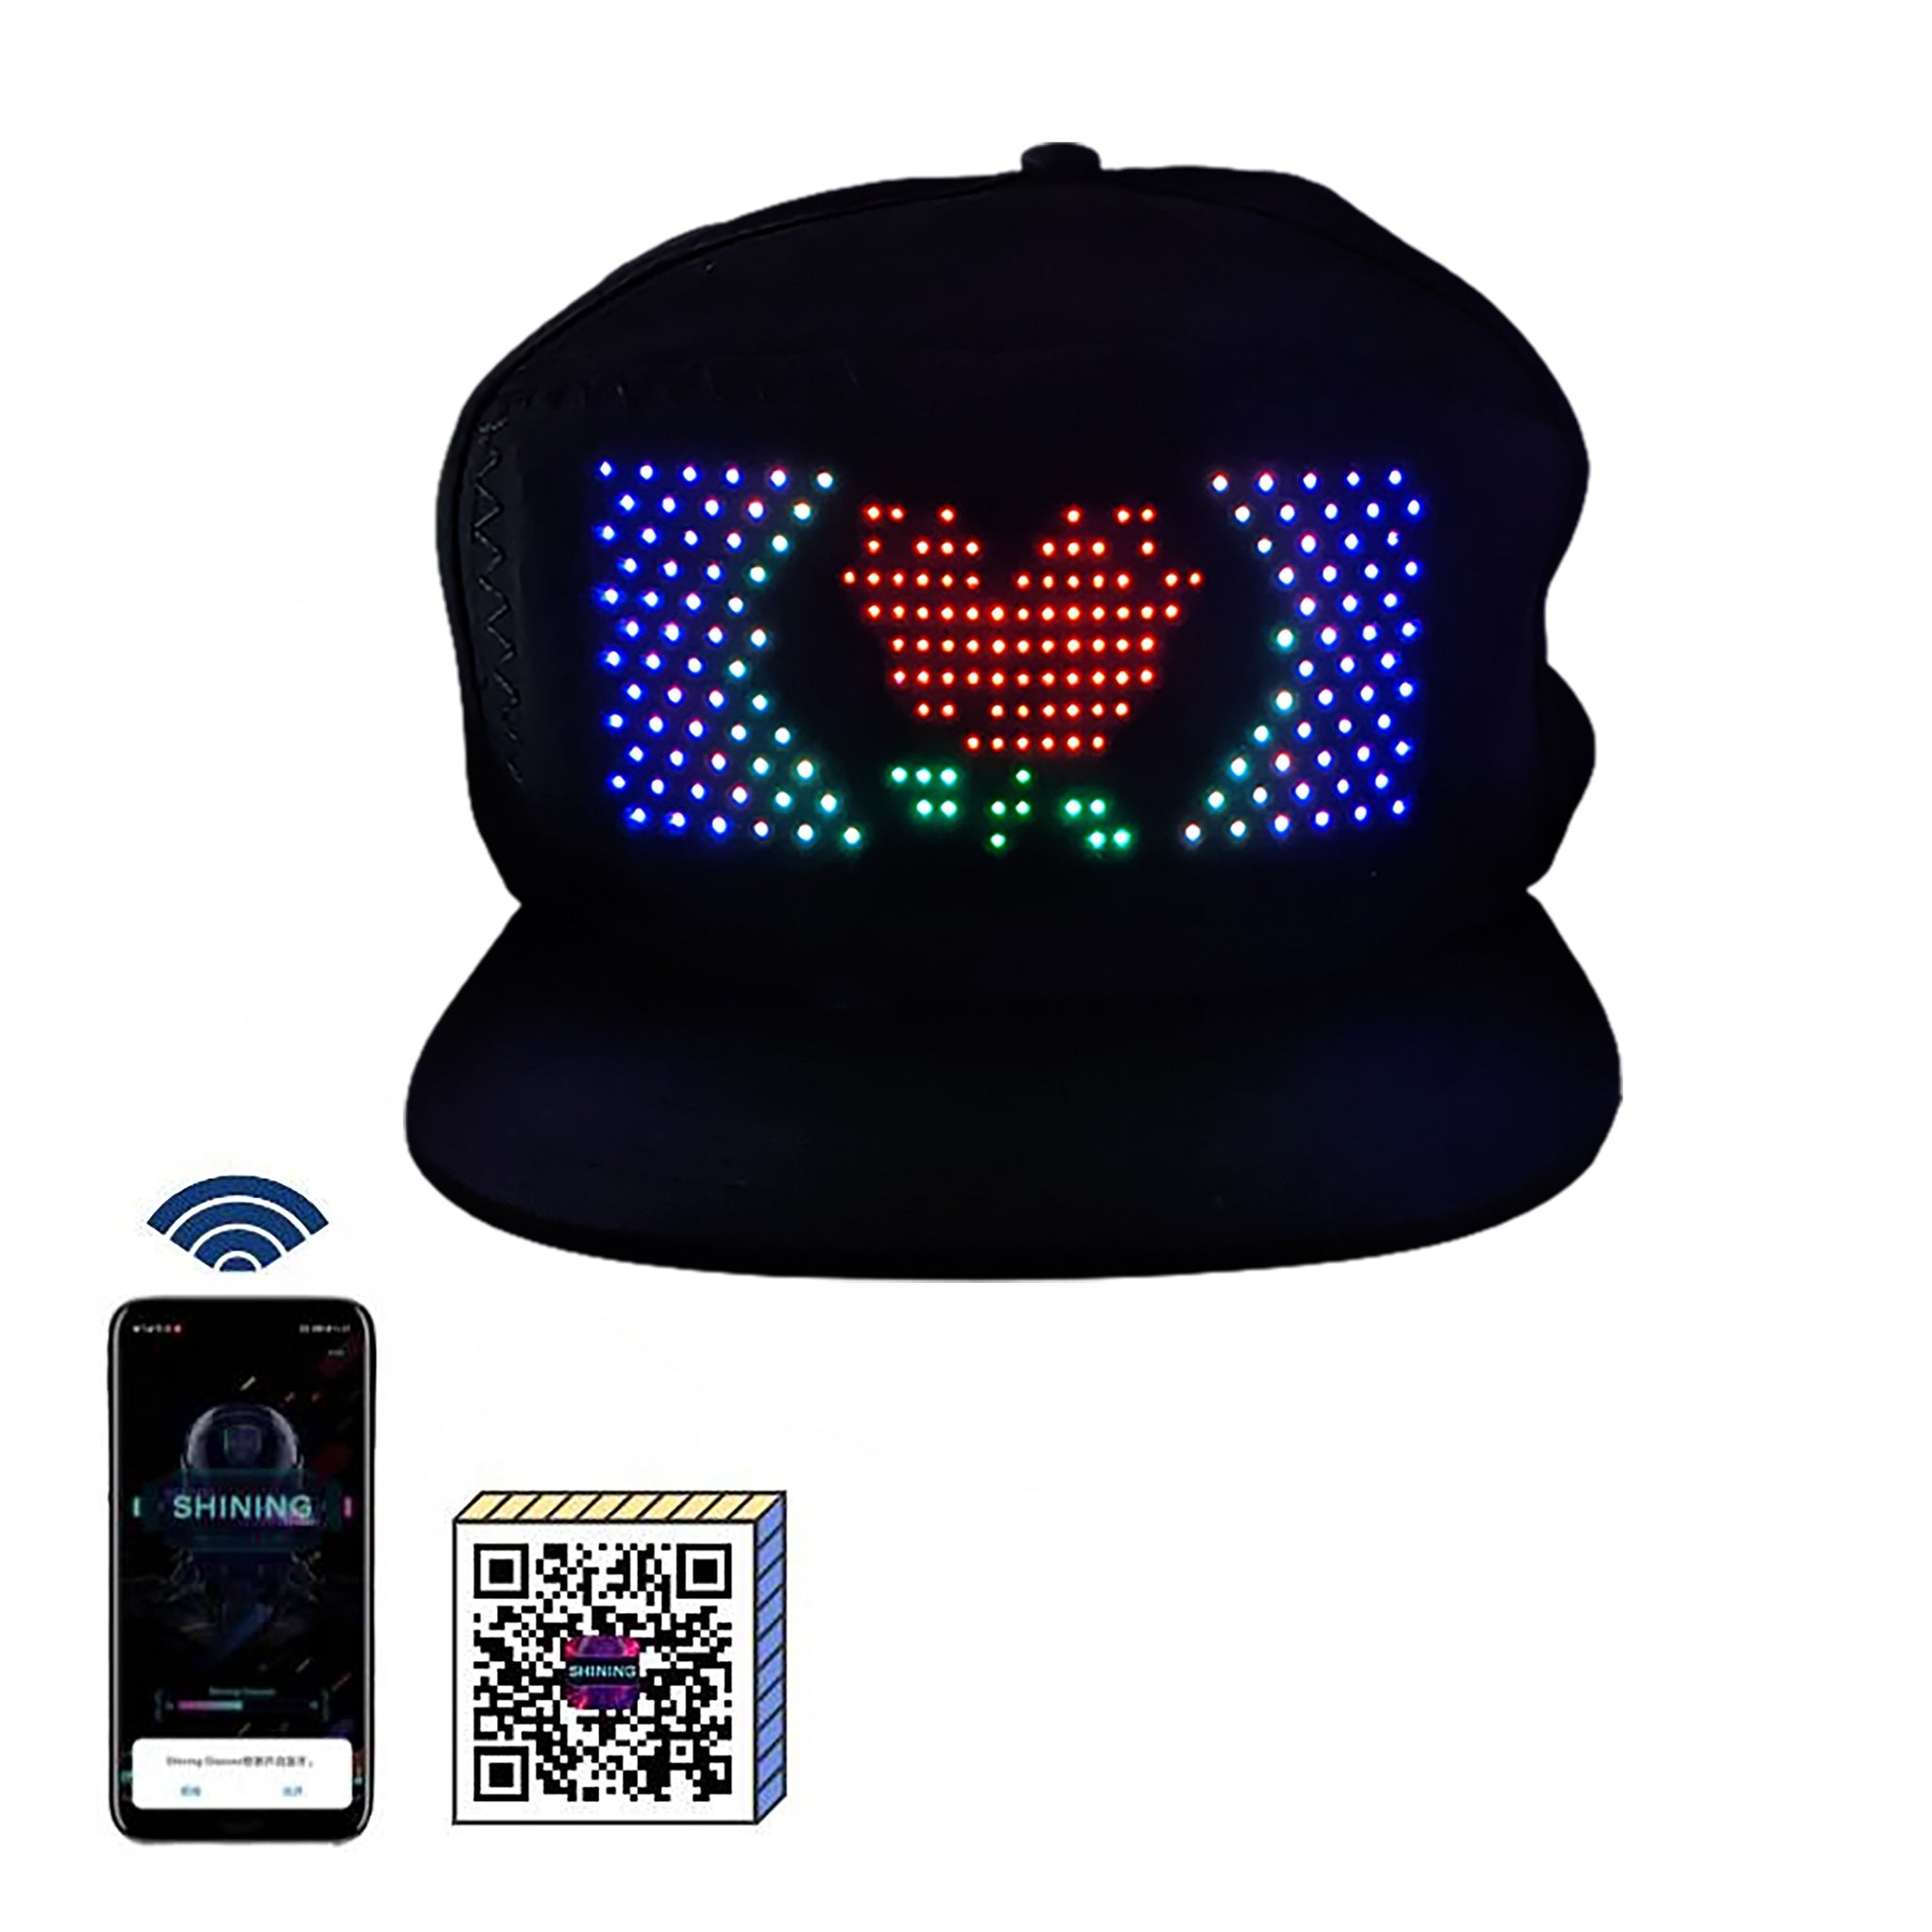 TGT Unique App Controlled LED Hat | Lightup Display Message LED Cap